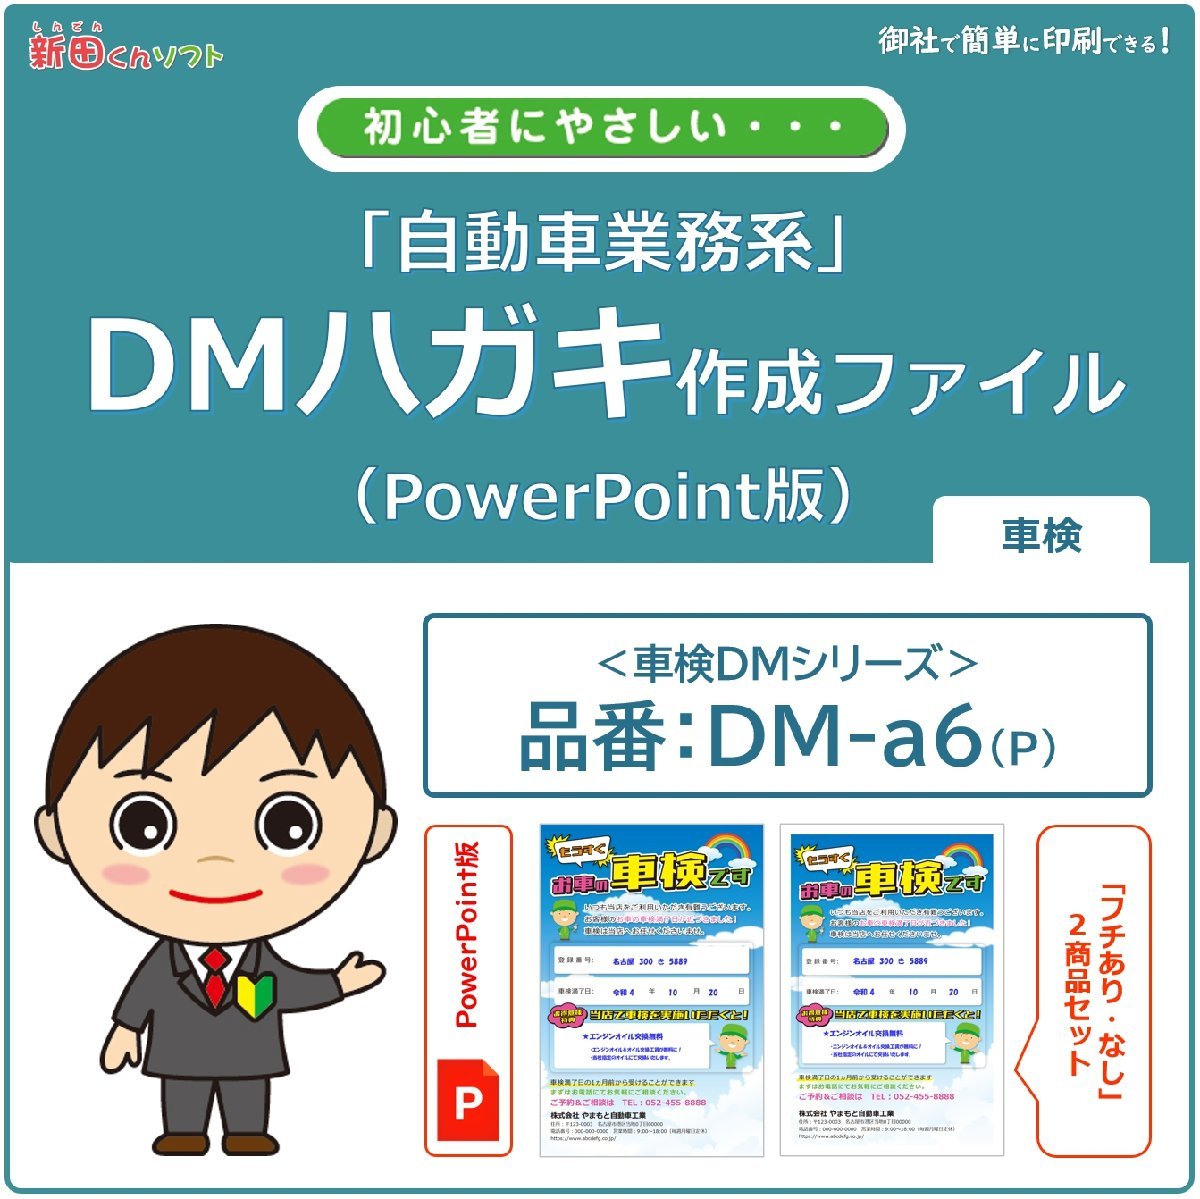 DM-a6p техосмотр "shaken". извещение DM изготовление файл (PowerPoint версия ) открытка дизайн Direct mail .. tool 